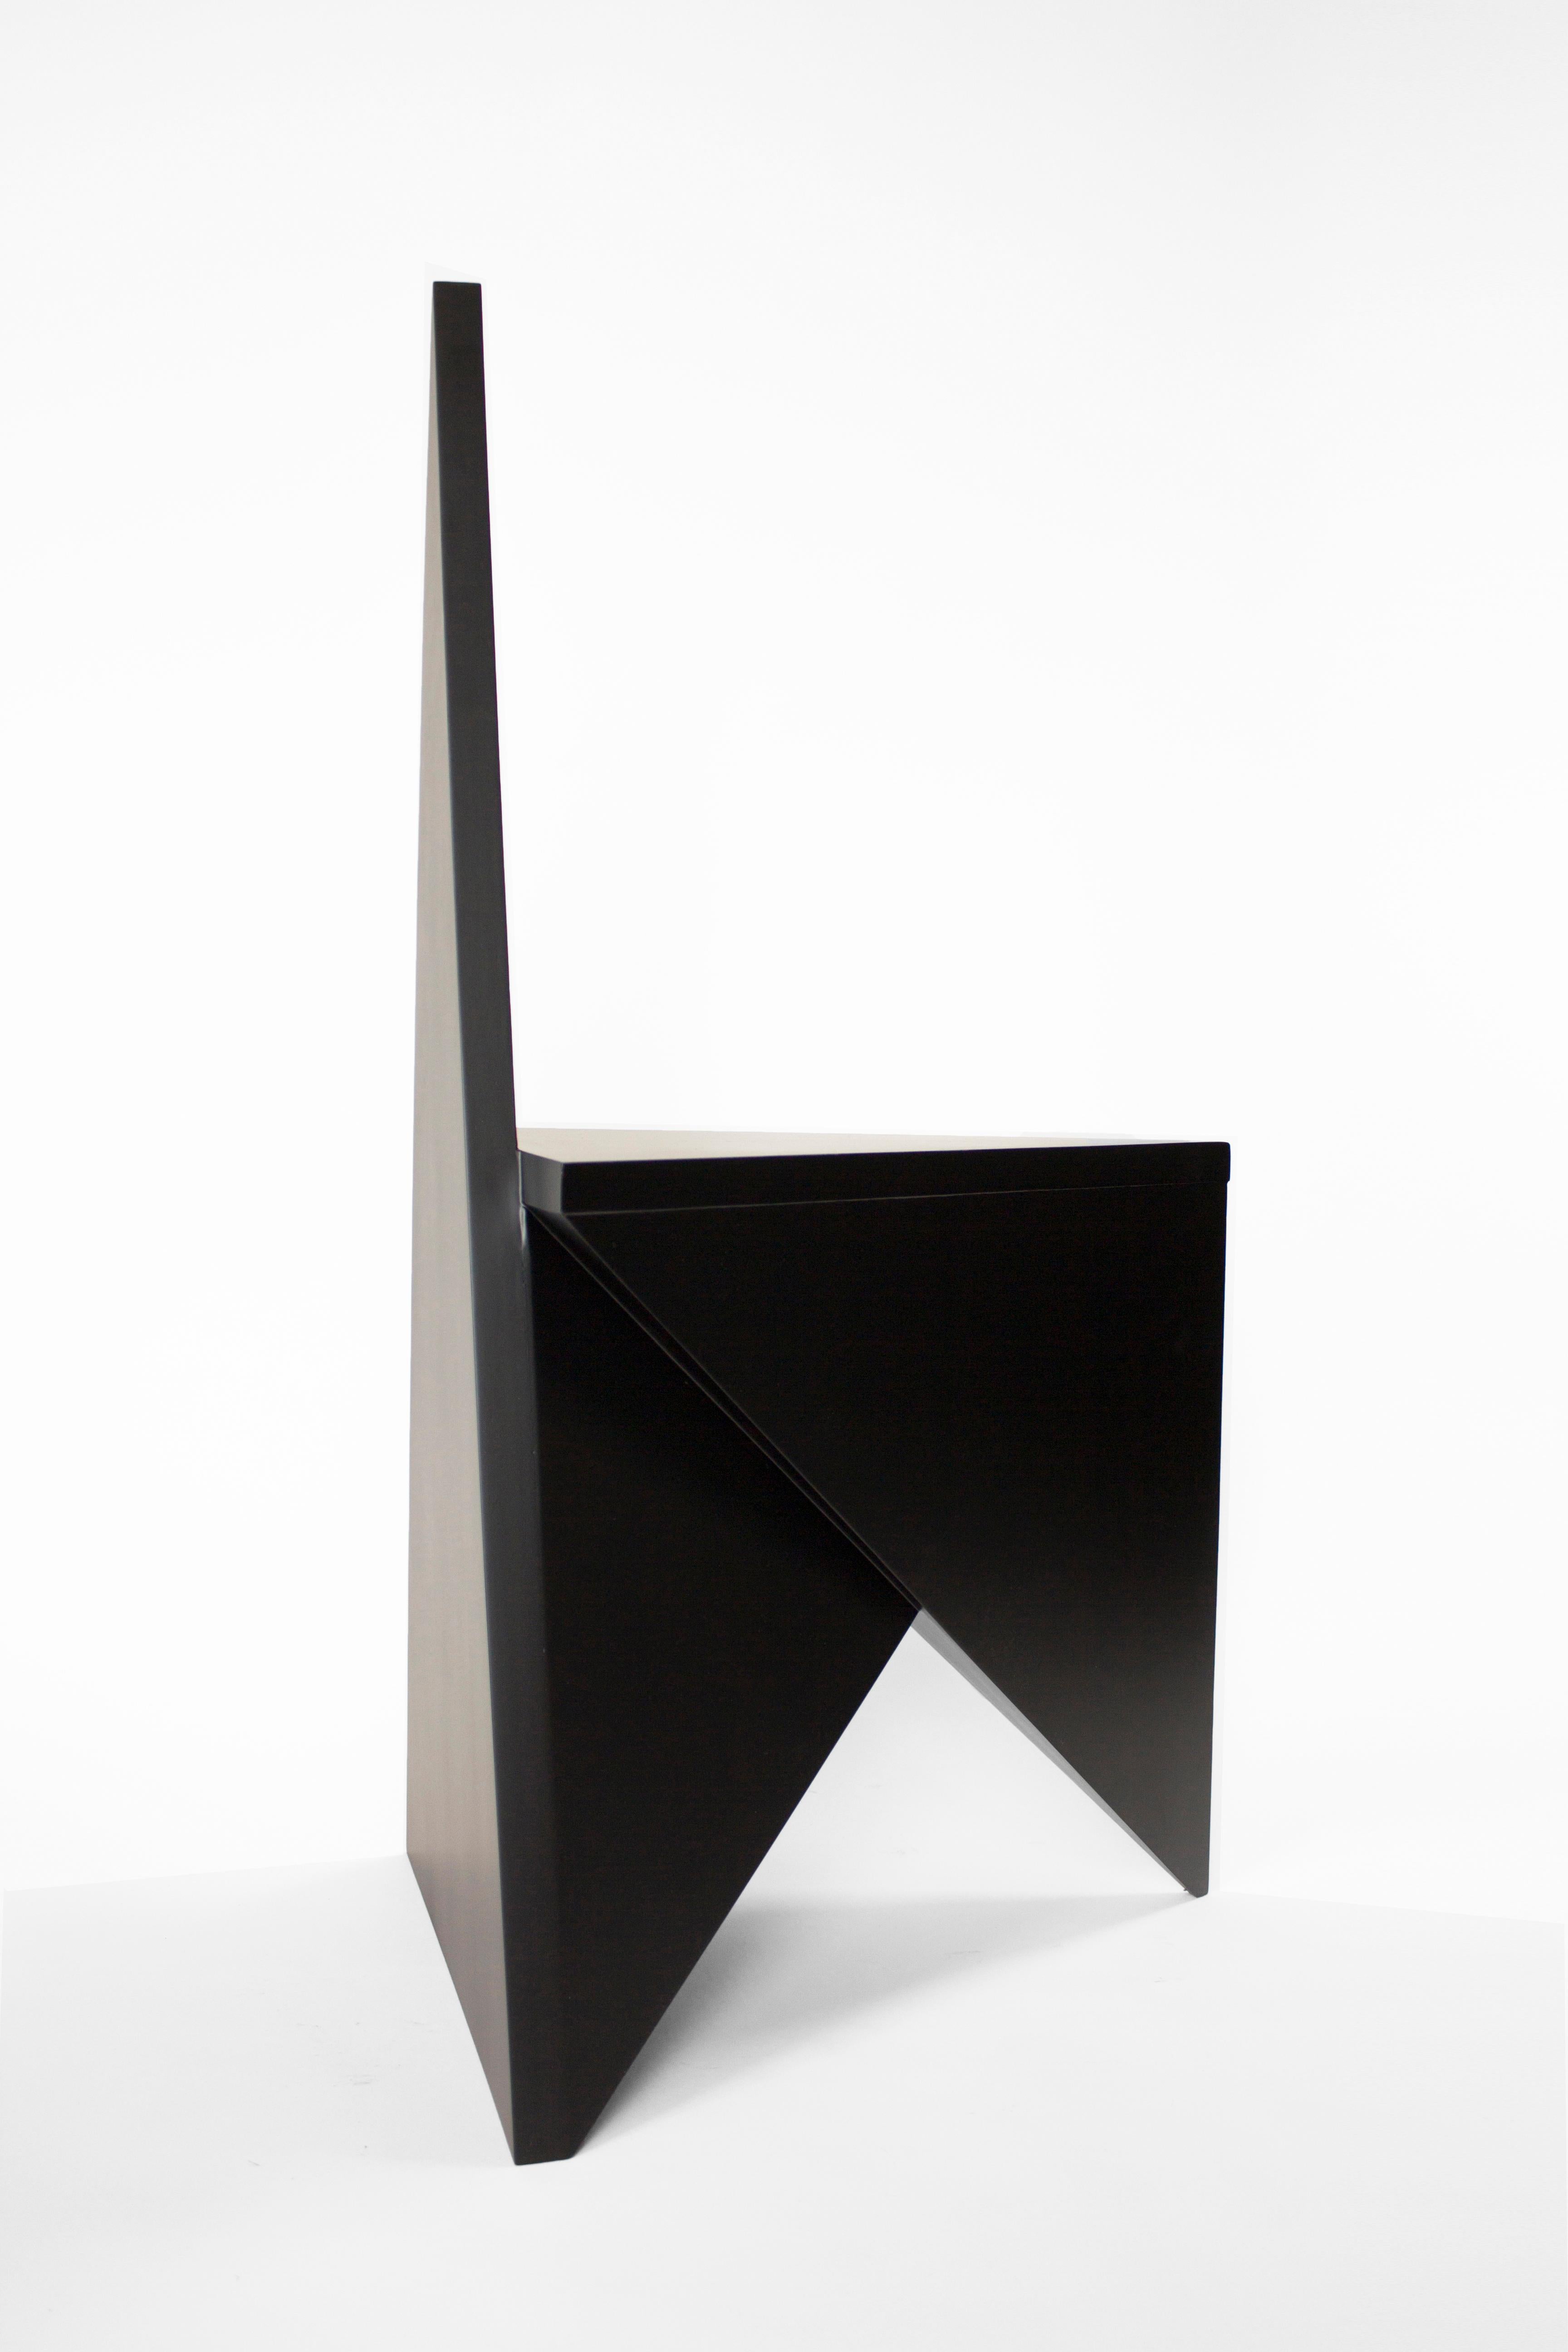 Material Lust [American, b. 1981,1986]
Vanishing Twin Chair, 2015 
Shown in black painted wood. 
Measures: 36